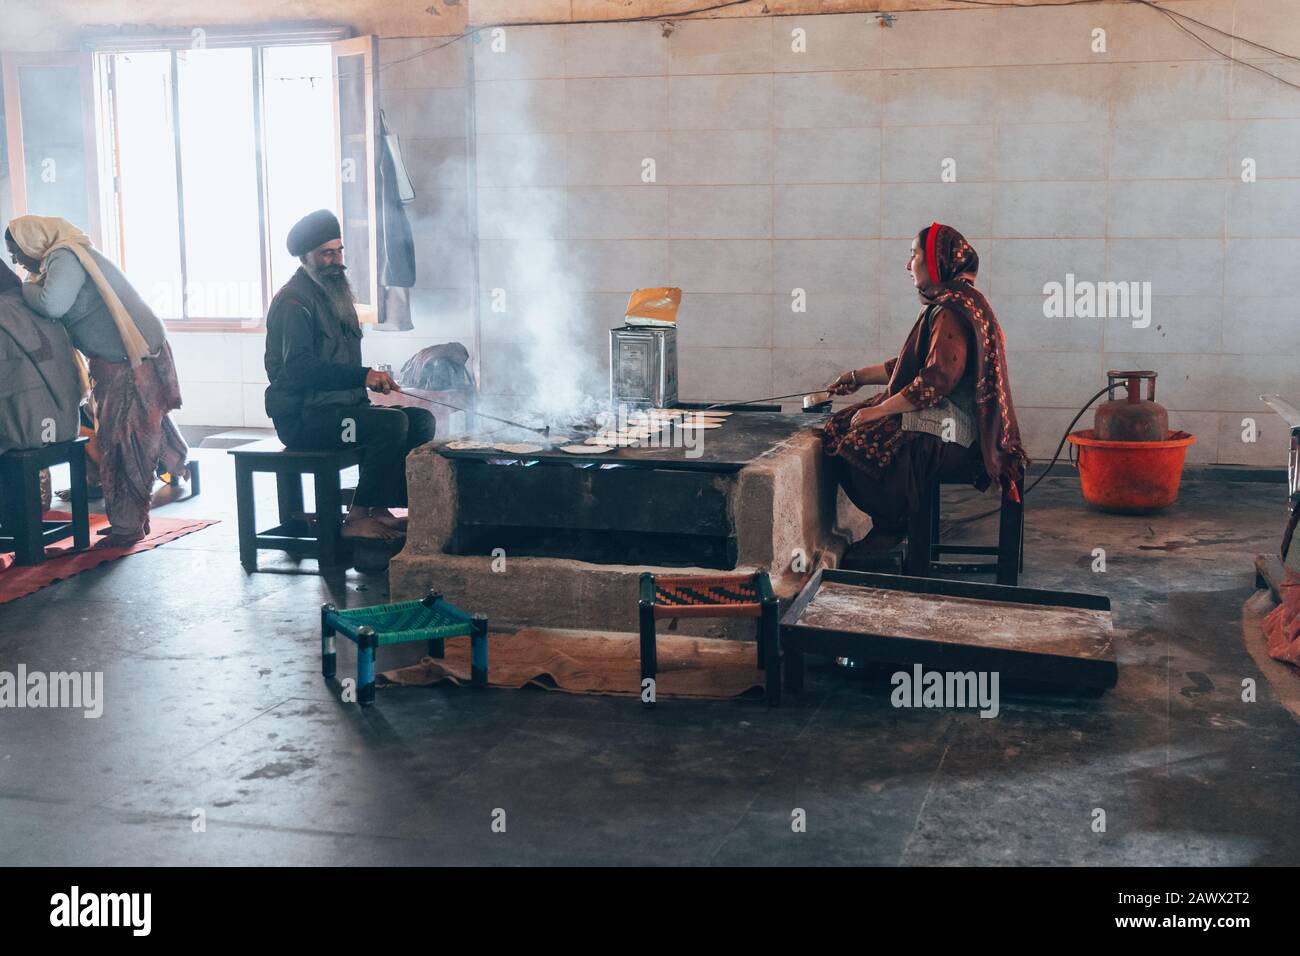 Amritsar India - Febuary 8, 2020: Sikh man and Indian woman prepare chapati - traditional Indian bread at the Golden Temple (sri harmandir sahib) Stock Photo